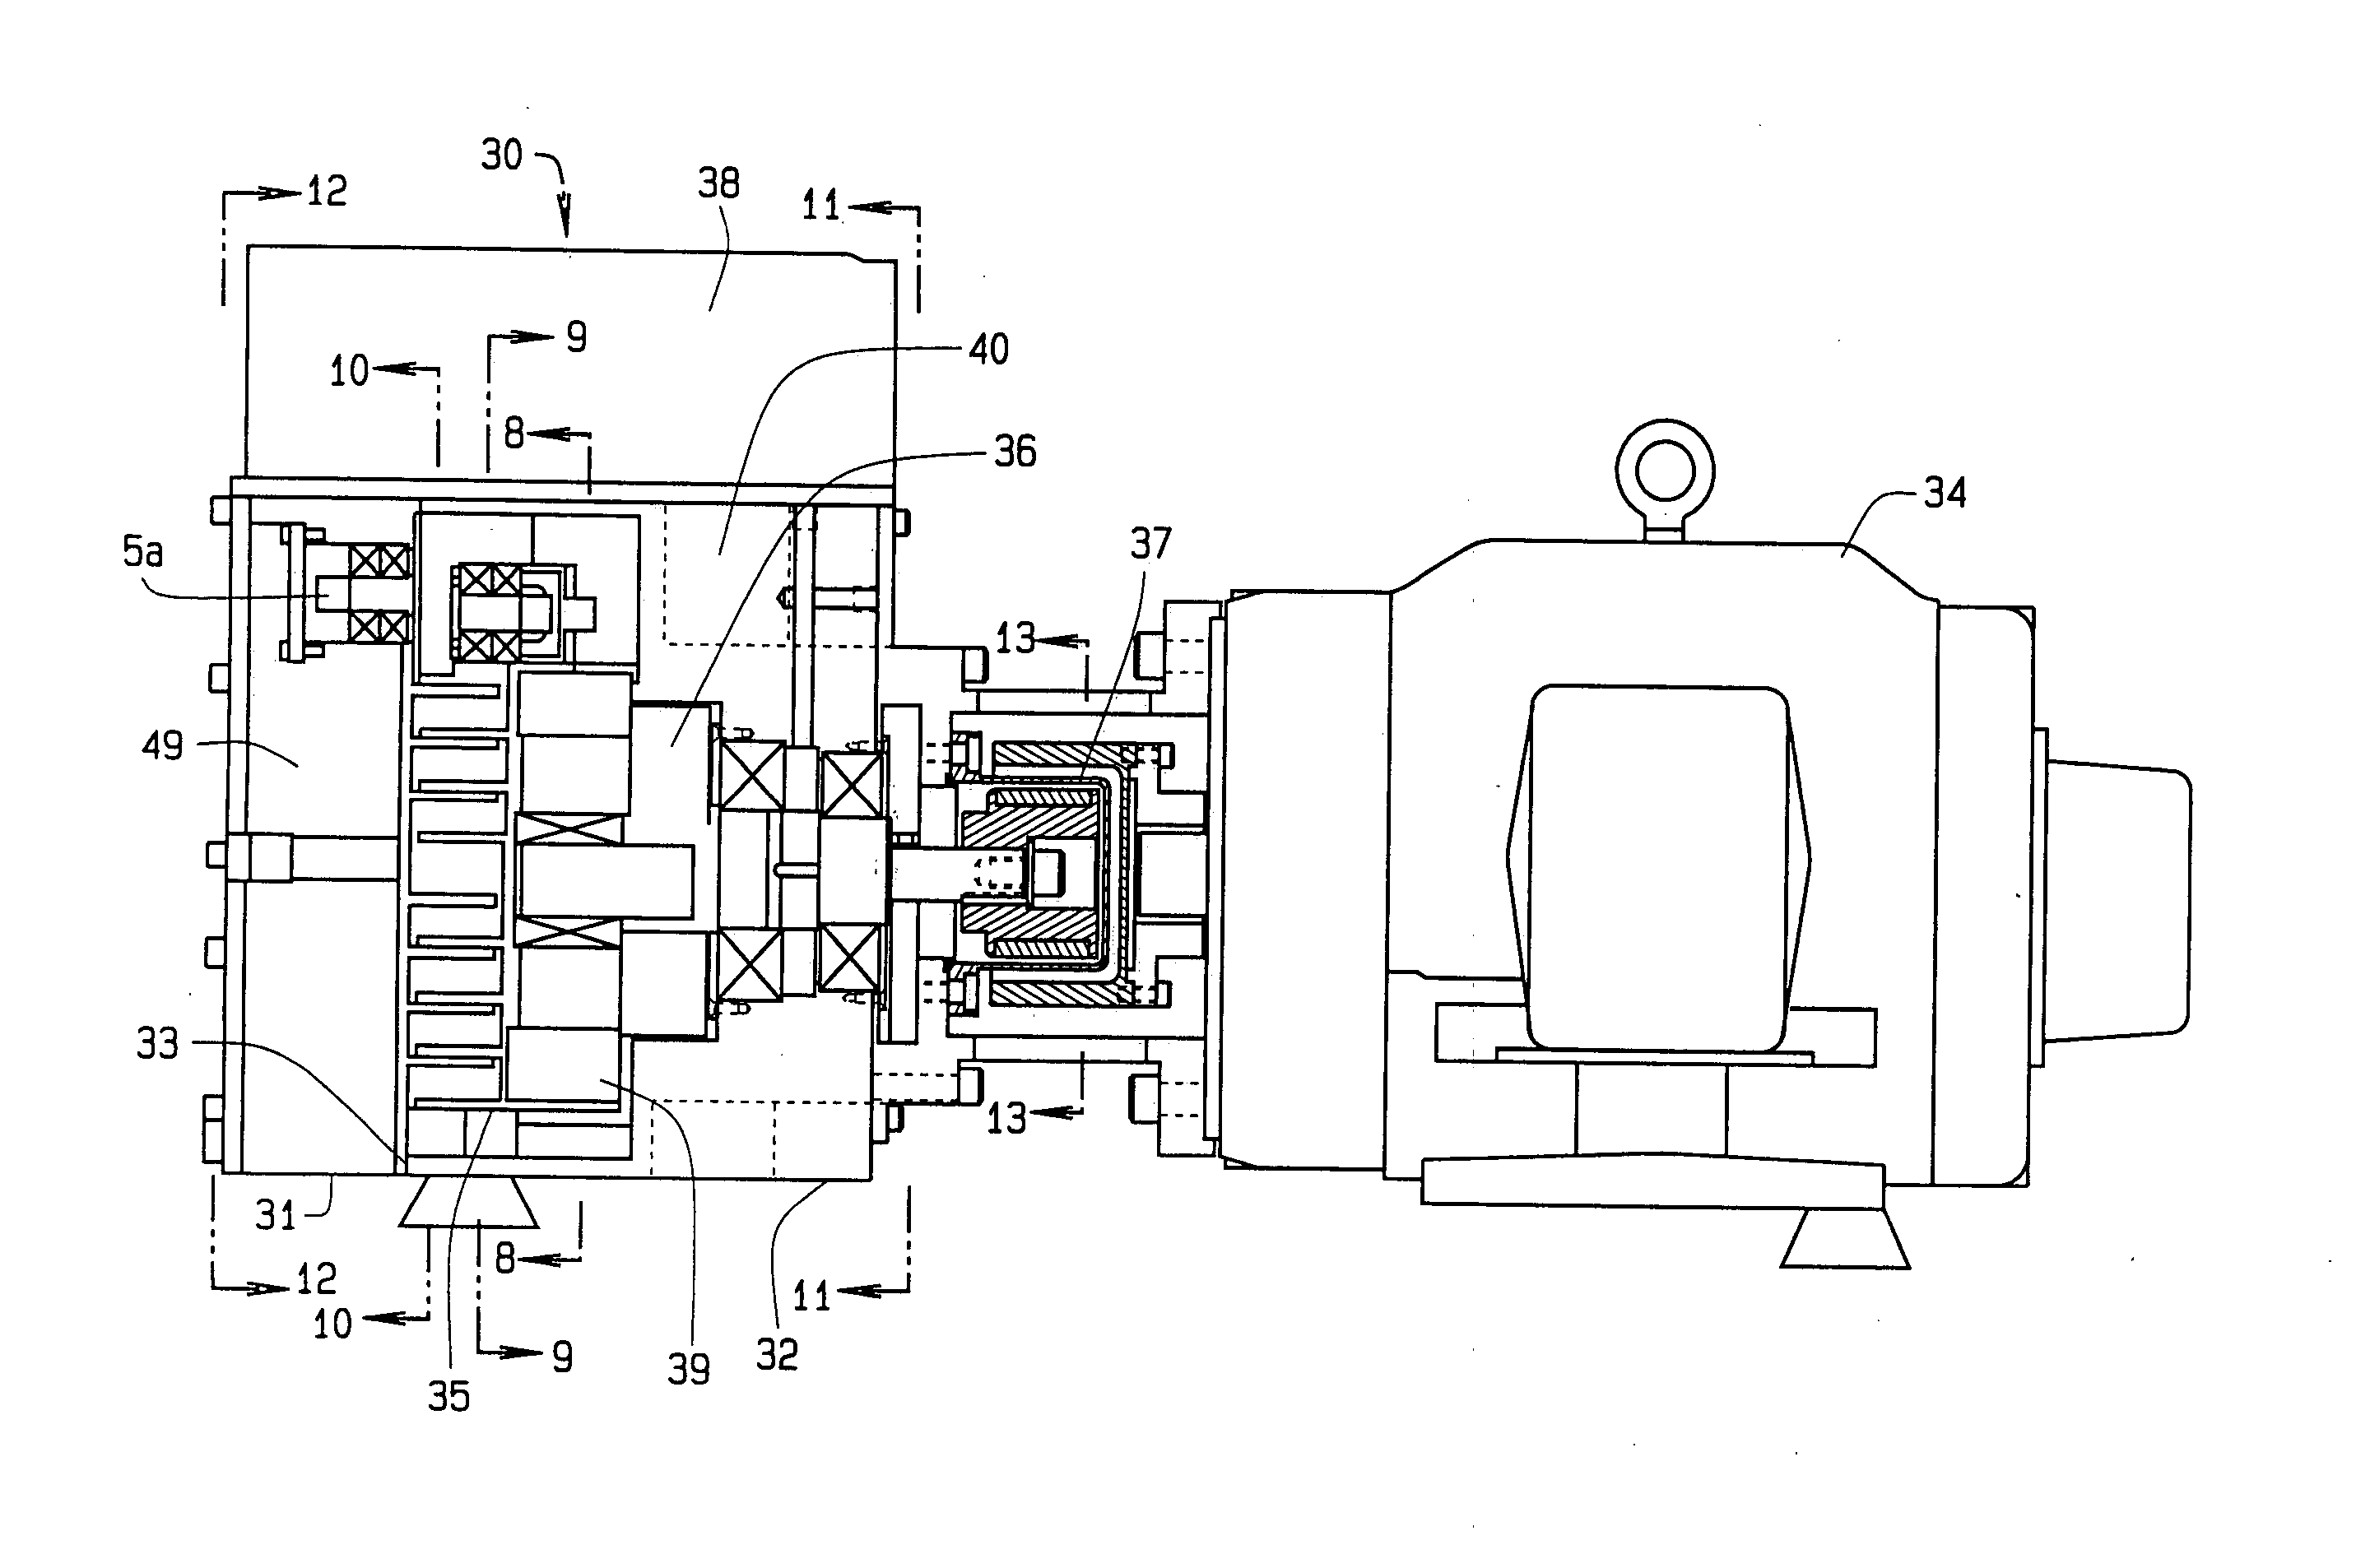 Three stage scroll vacuum pump